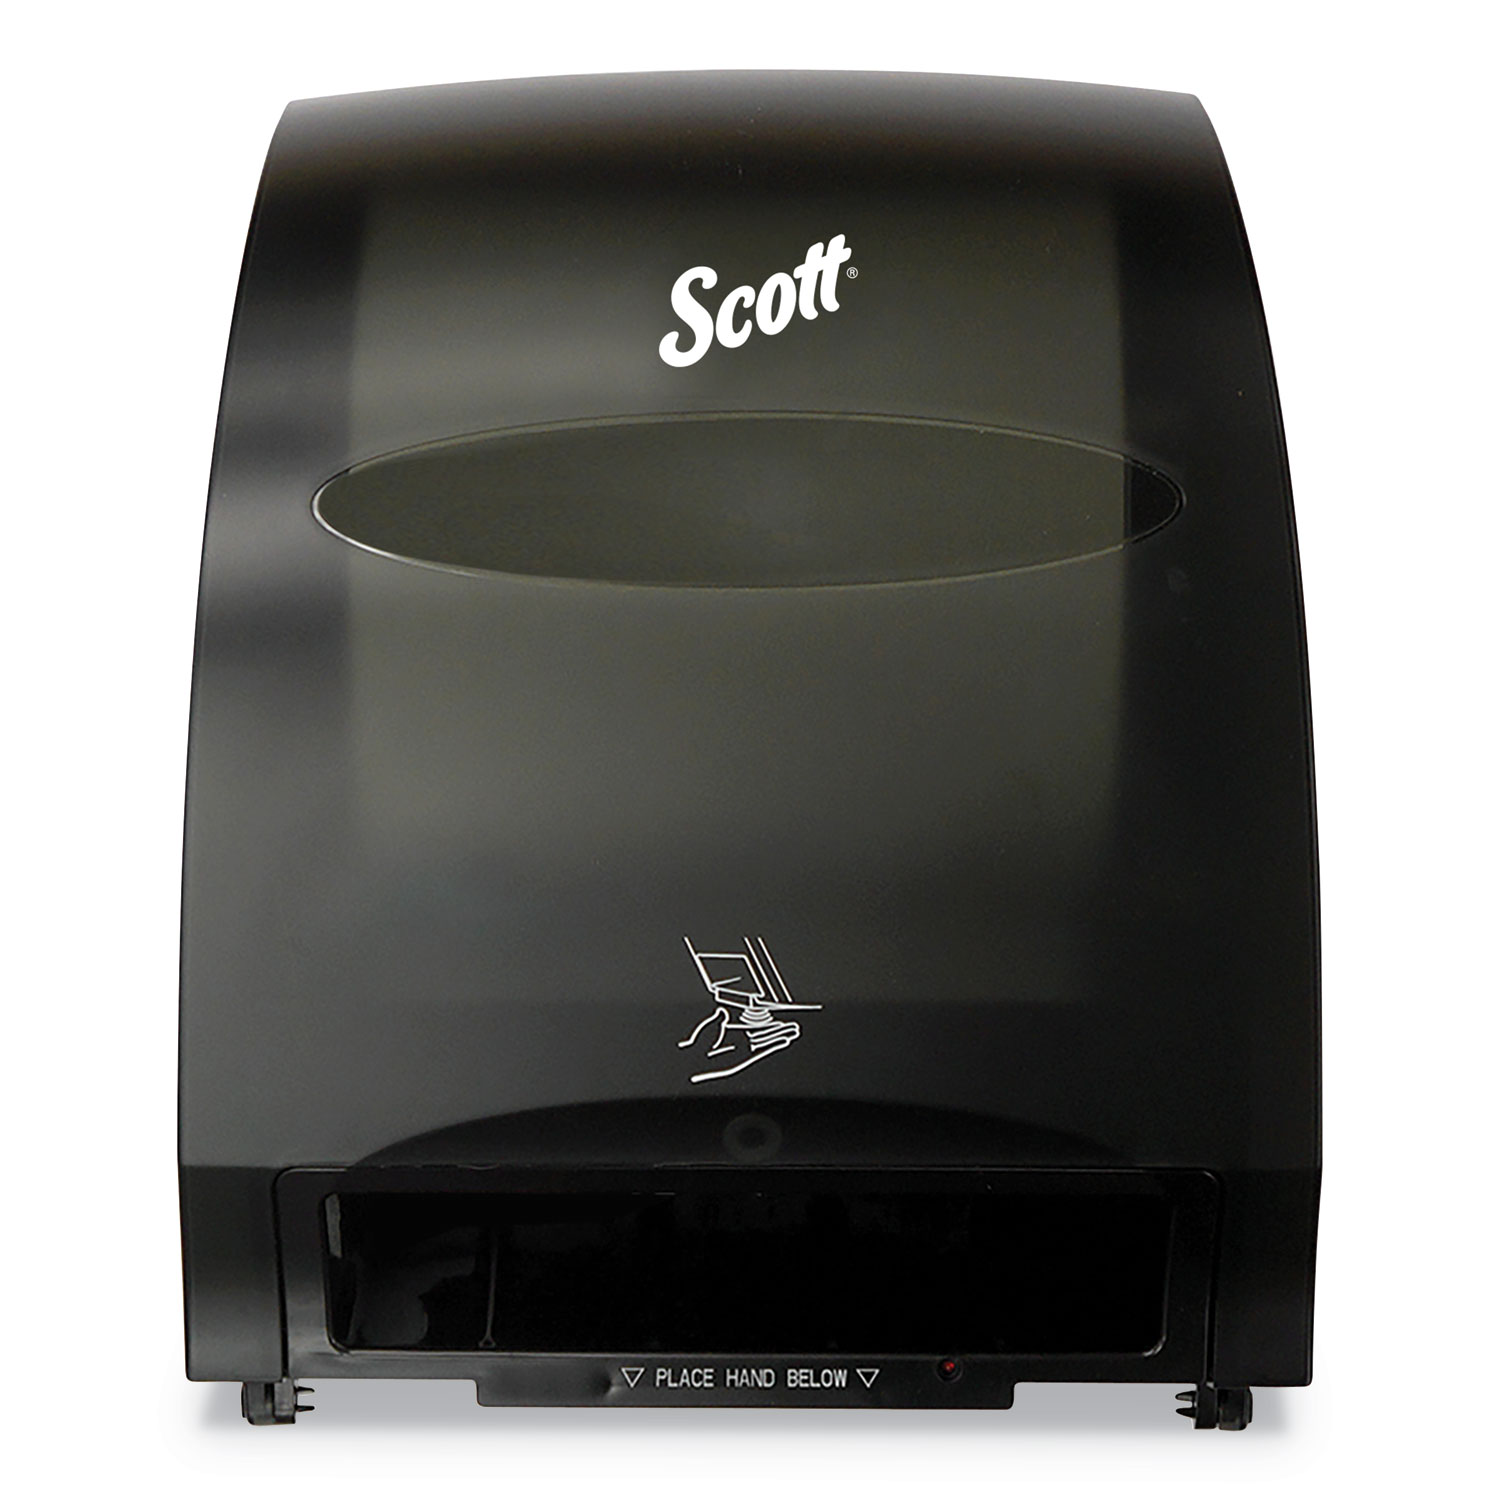  Scott 48860 Essential Electronic Hard Roll Towel Dispenser, 12.7w x 9.572d x 15.761h, Black (KCC48860) 